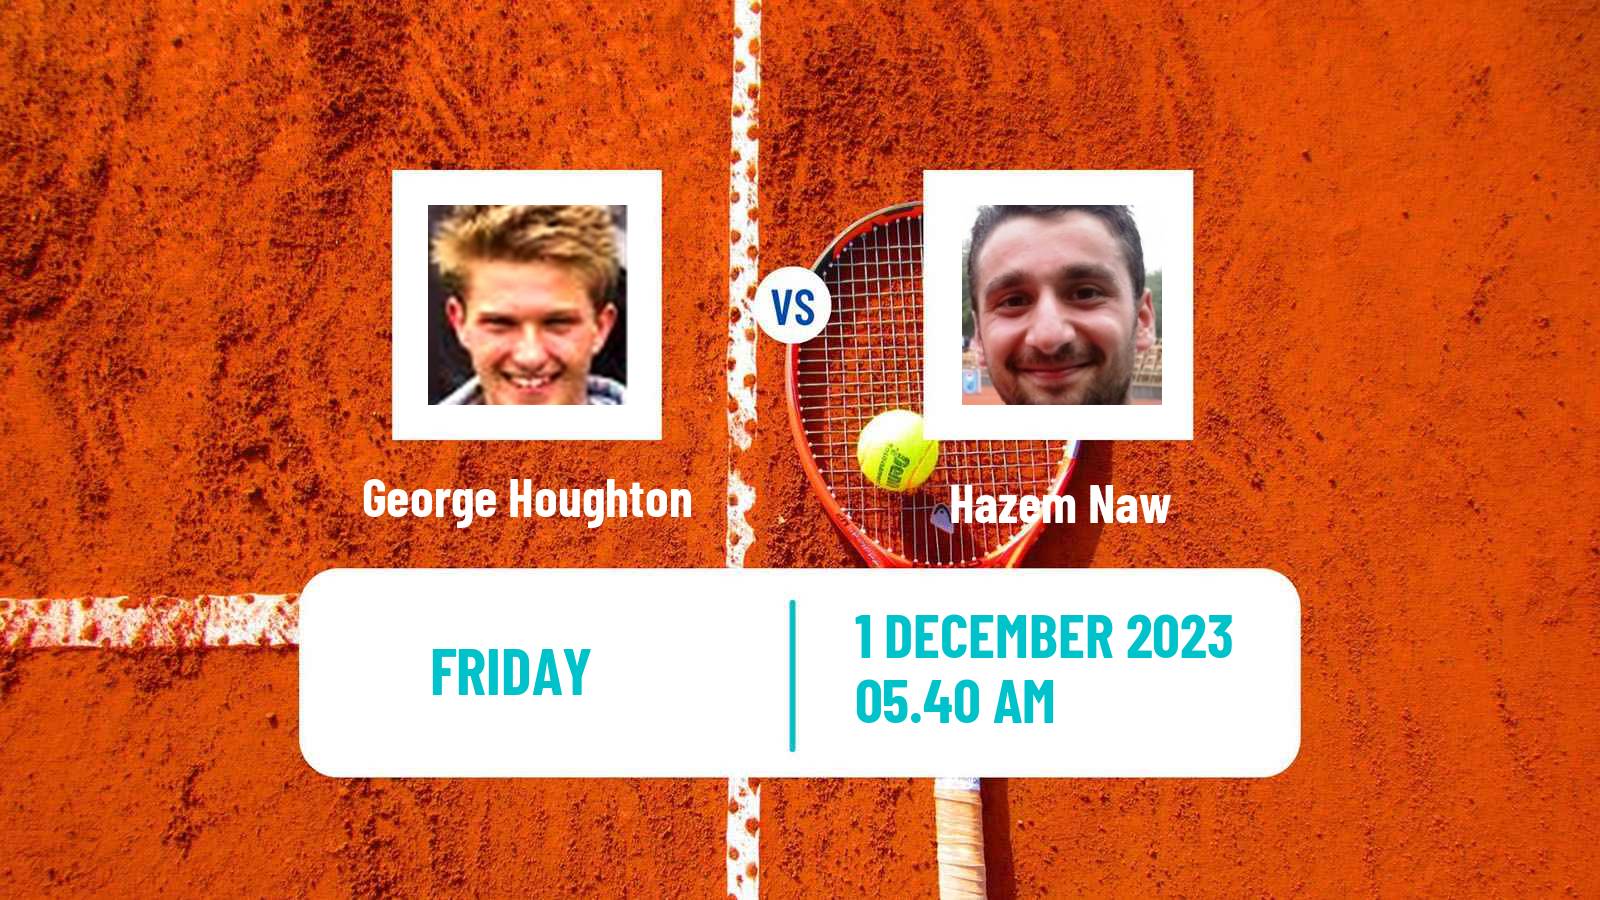 Tennis ITF M15 Madrid 2 Men George Houghton - Hazem Naw